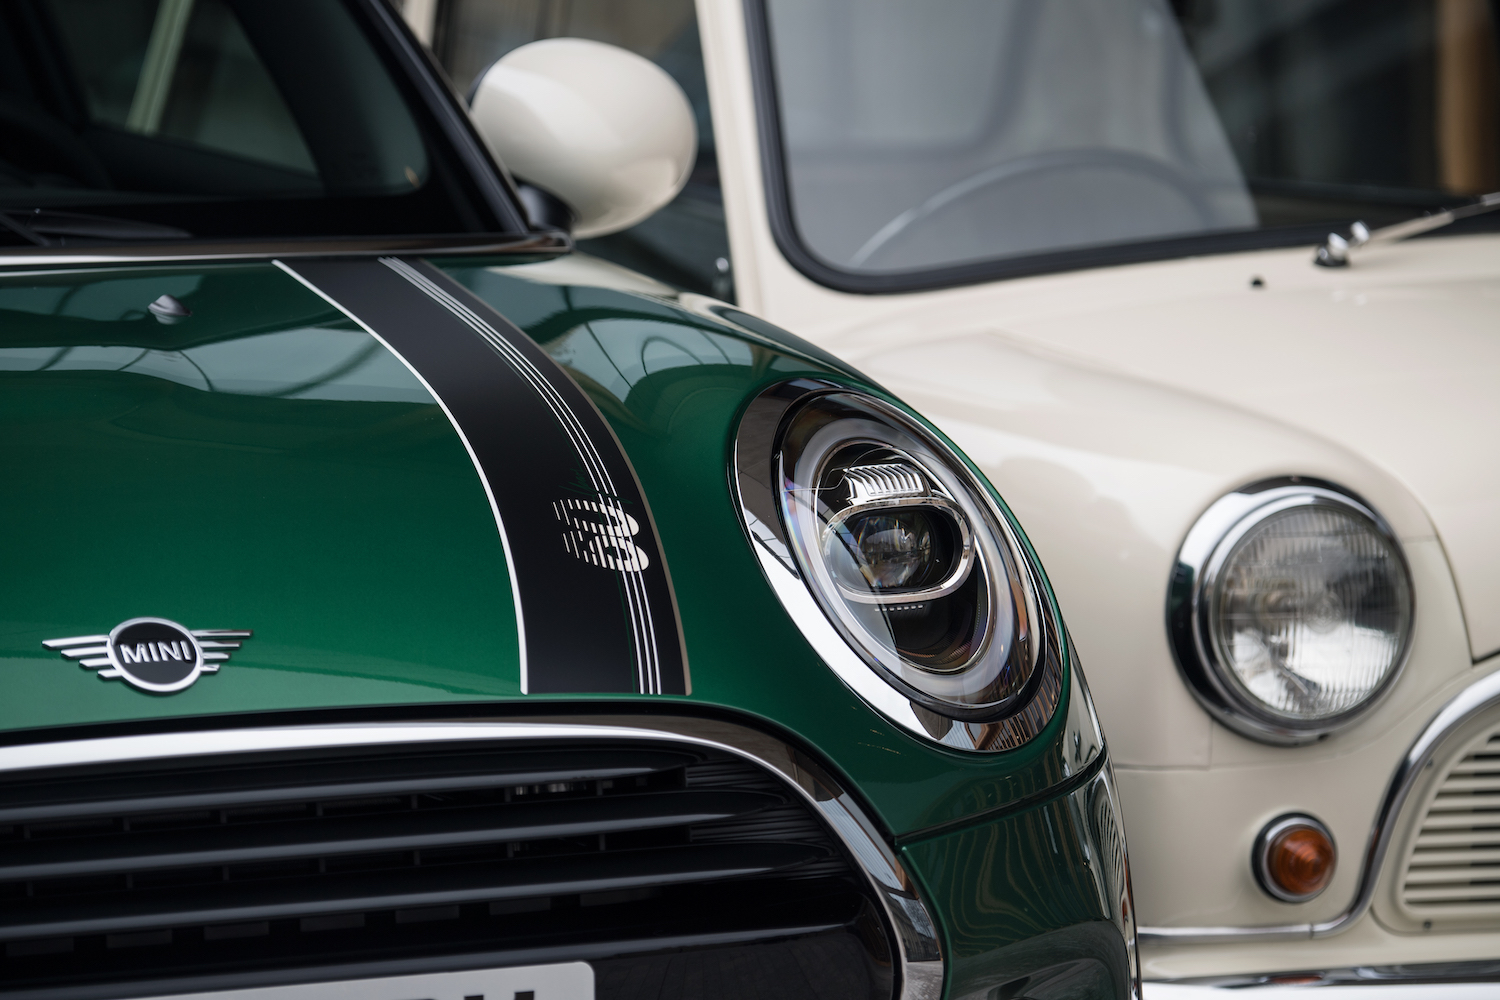 A green new Mini Cooper and a classic Morris Mini-Minor.